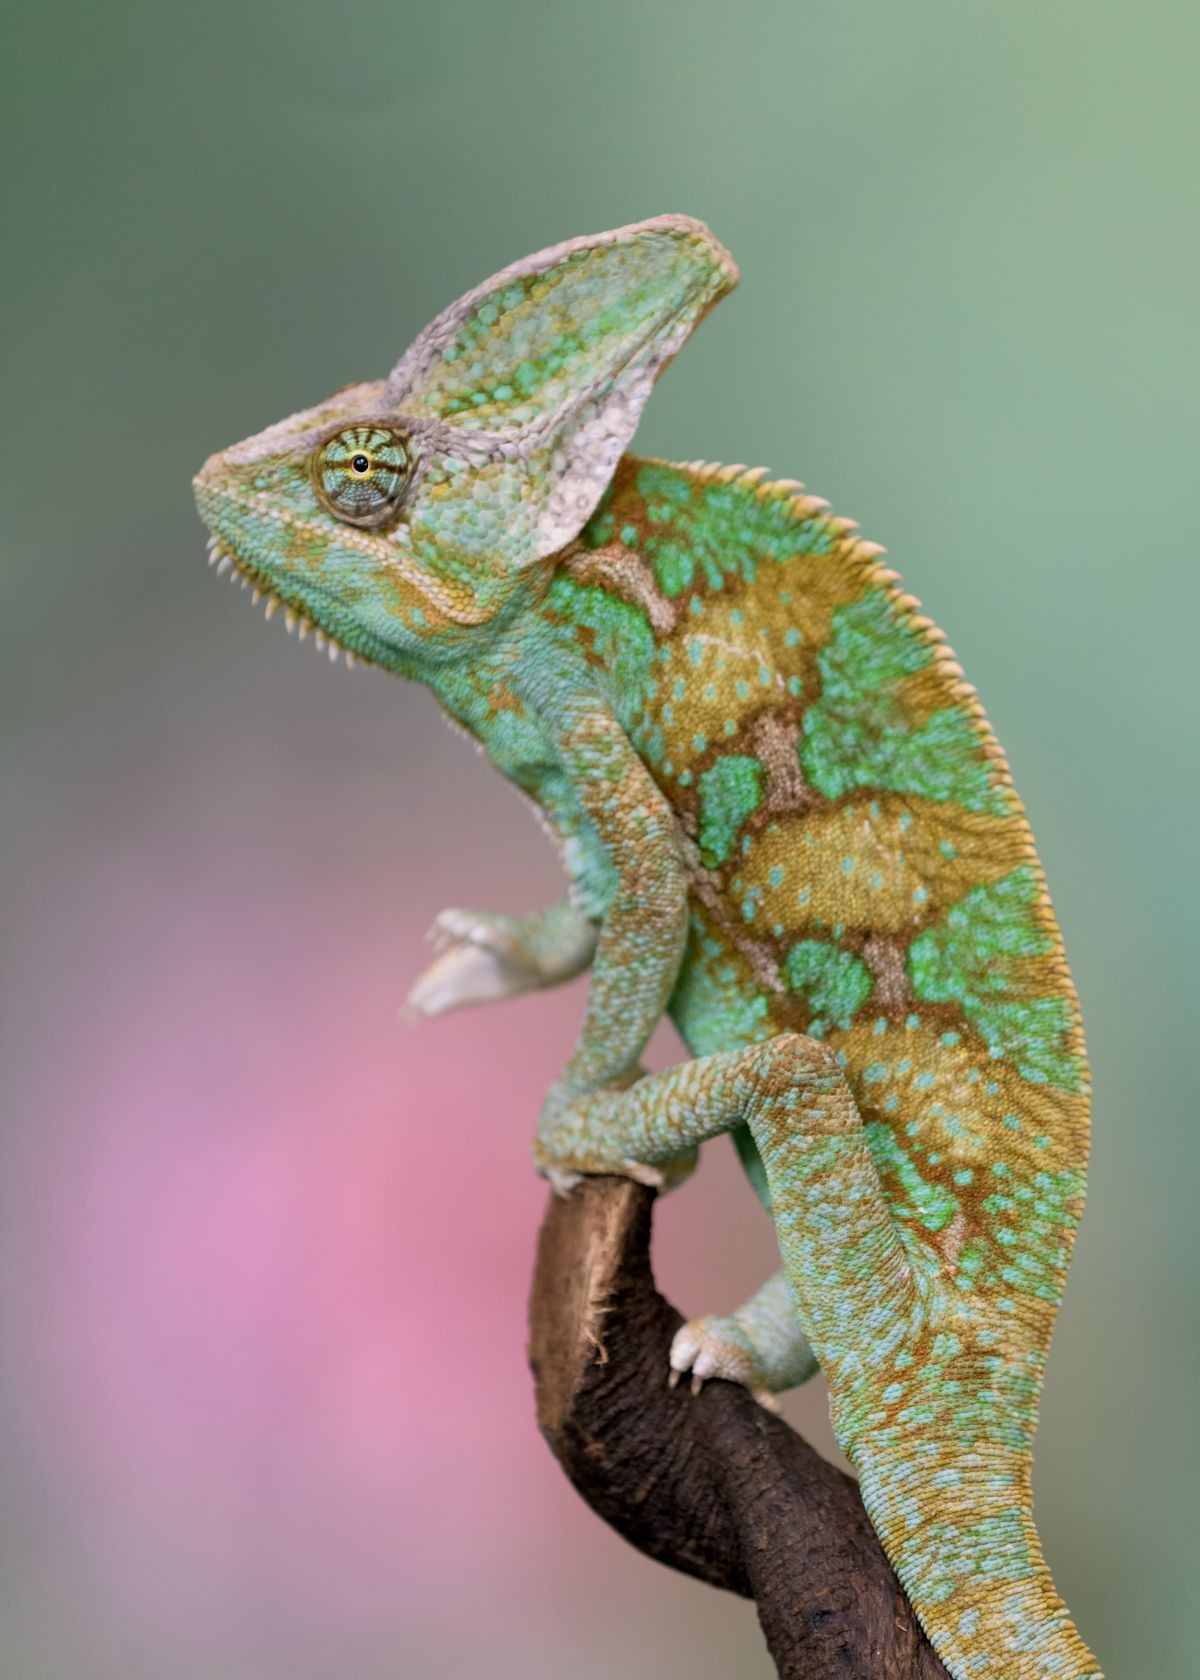 Closeup profile portrait of a Dragon lizard perched on a tree branch